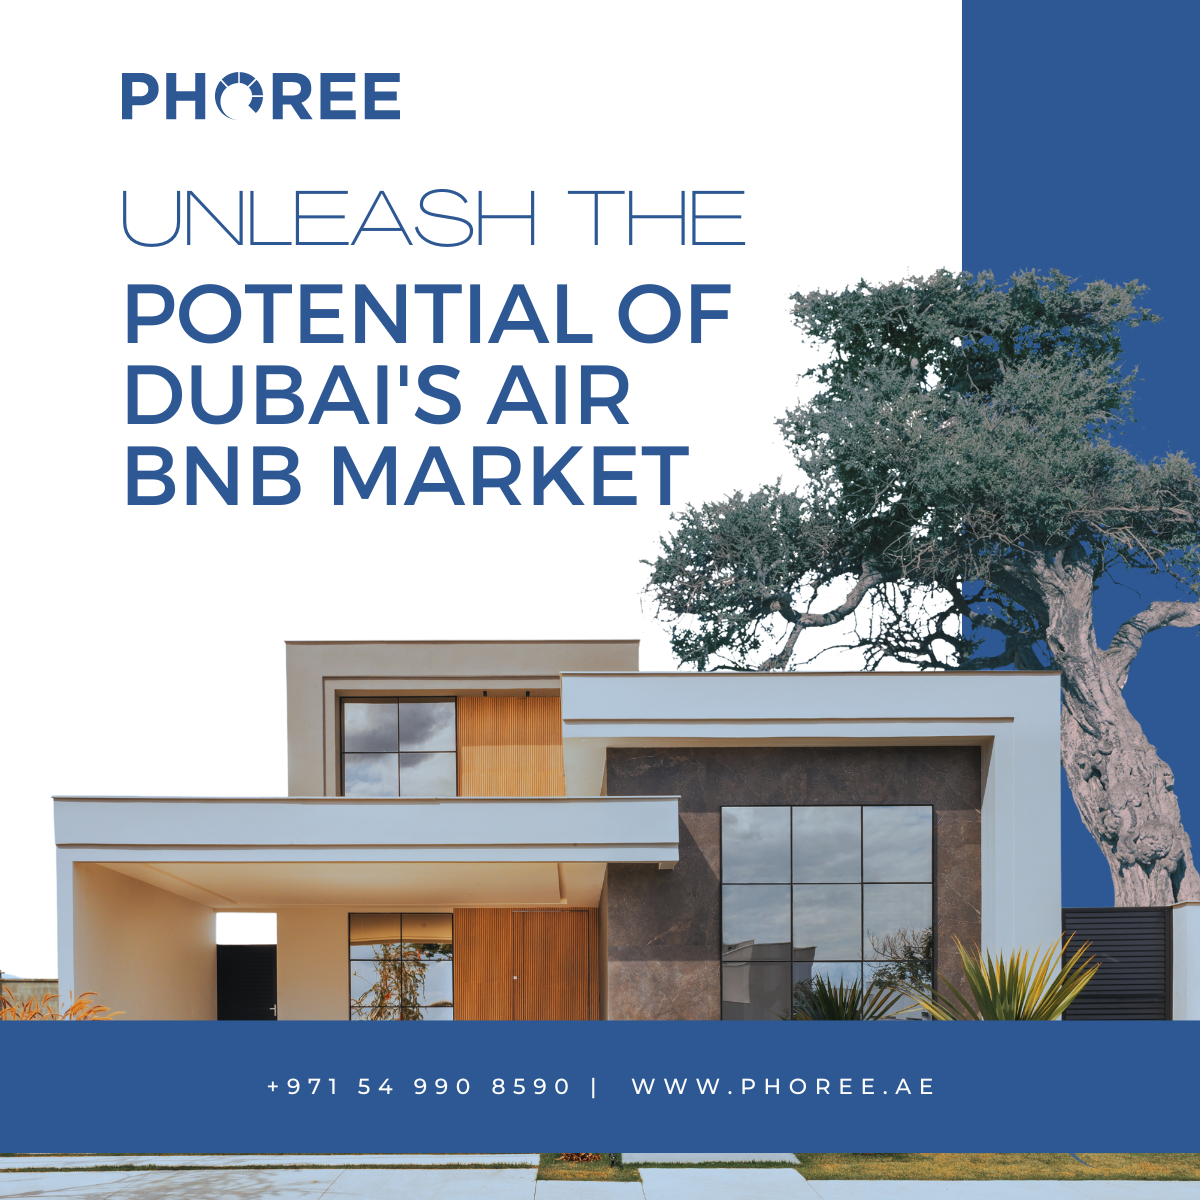 POTENTIAL OF DUBAI'S AIR BNB MARKET